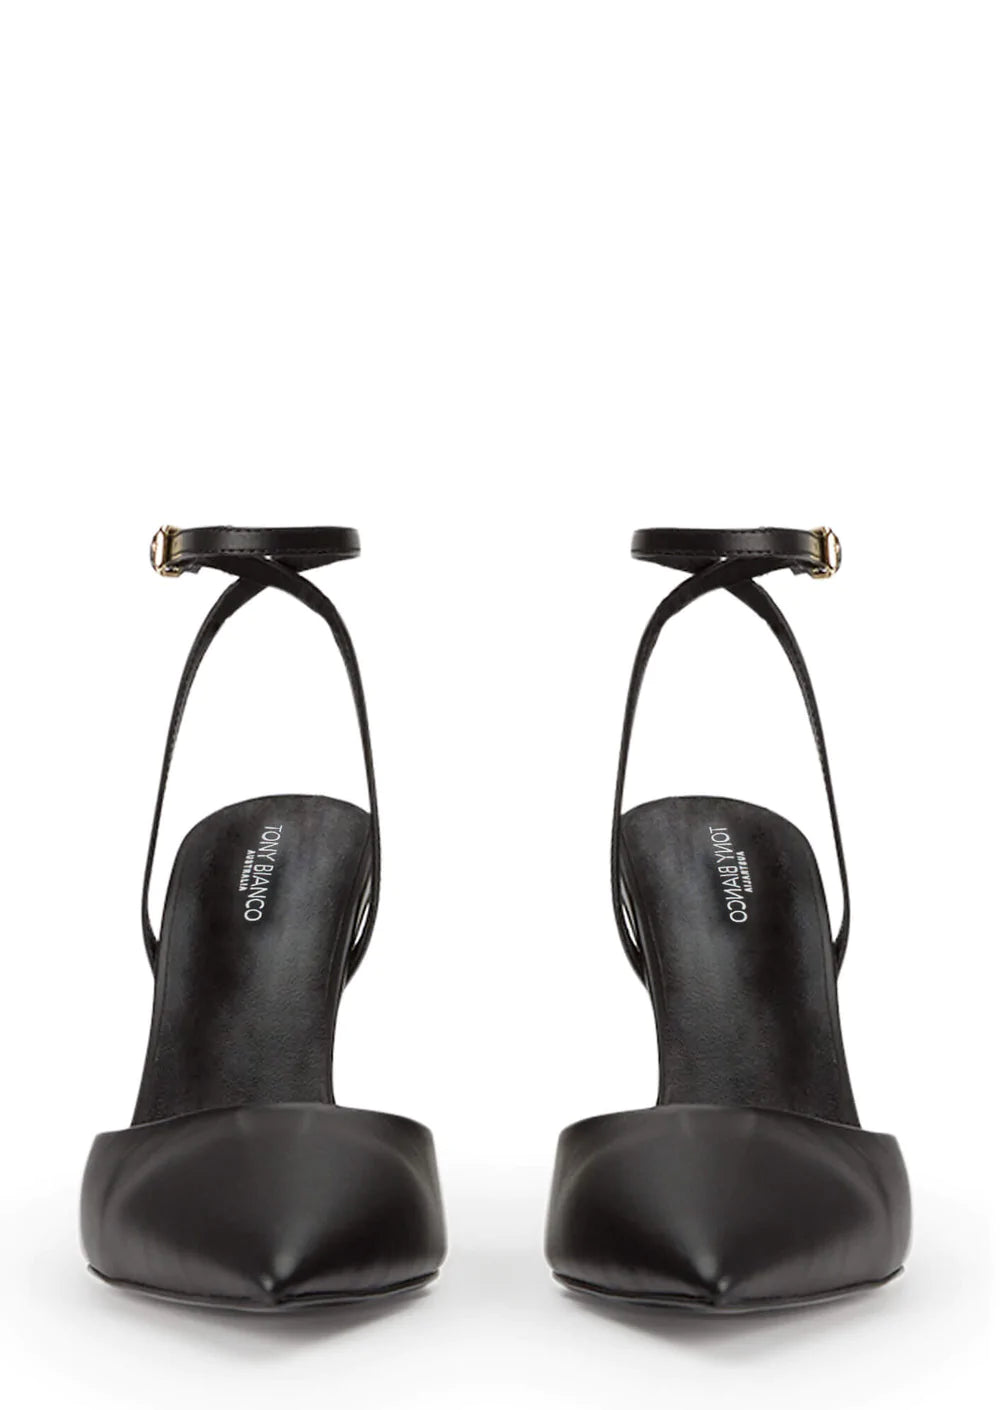 AVALON PUMP - TONY BIANCO - 10, 5, 6, 6.5, 7, 7.5, 8, 8.5, 9, BLACK, on sale, pump, pump on sale, SKIN, stiletto, stiletto heel, womens footwear - Stomp Shoes Darwin